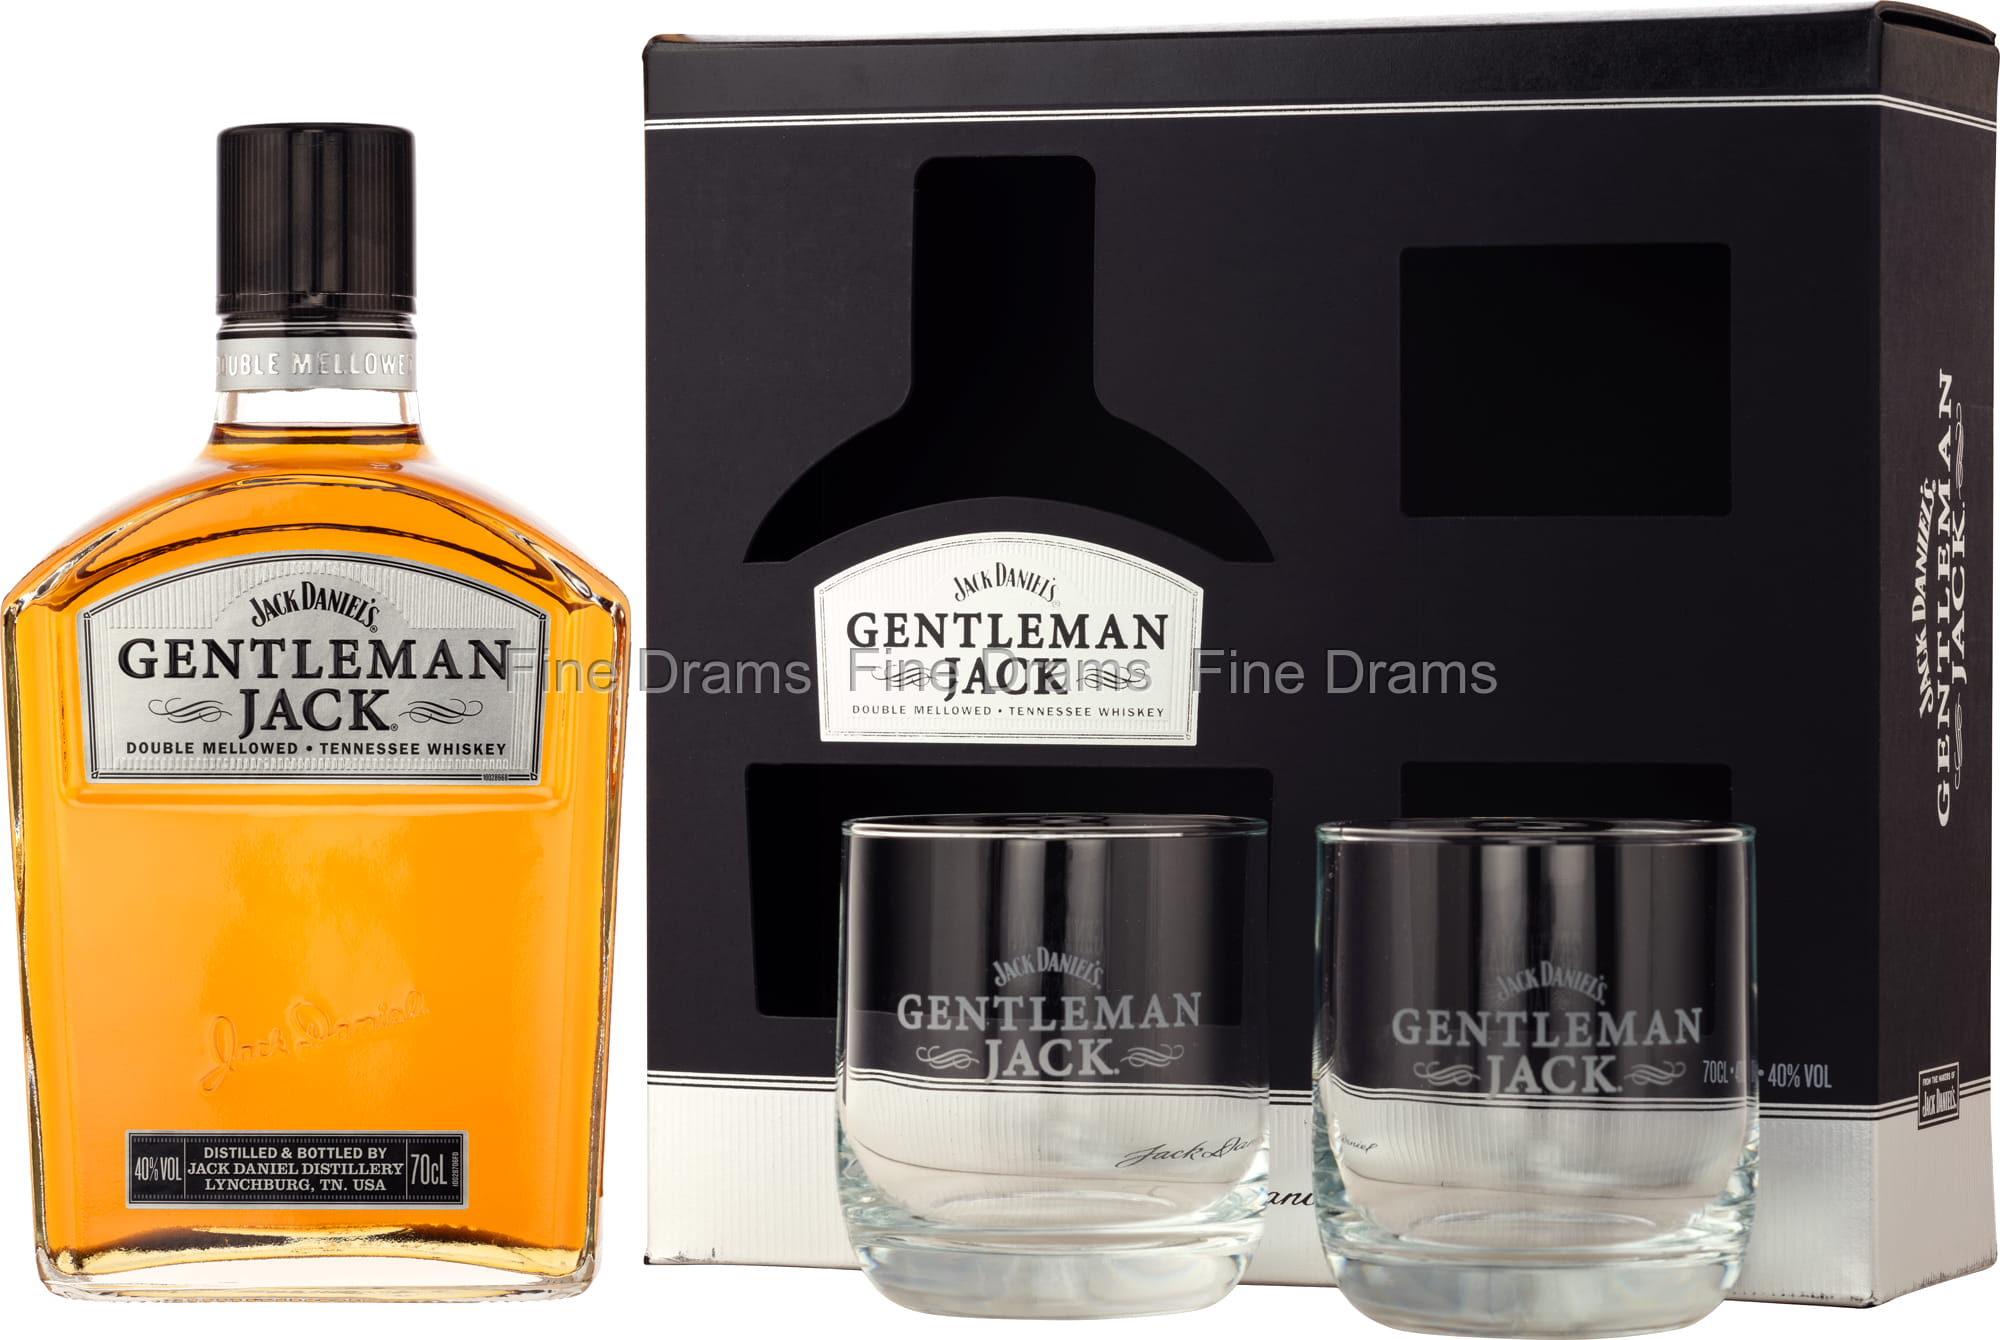 Jack Daniel's Gentleman Jack Whisky Gift Pack - 2 Glasses